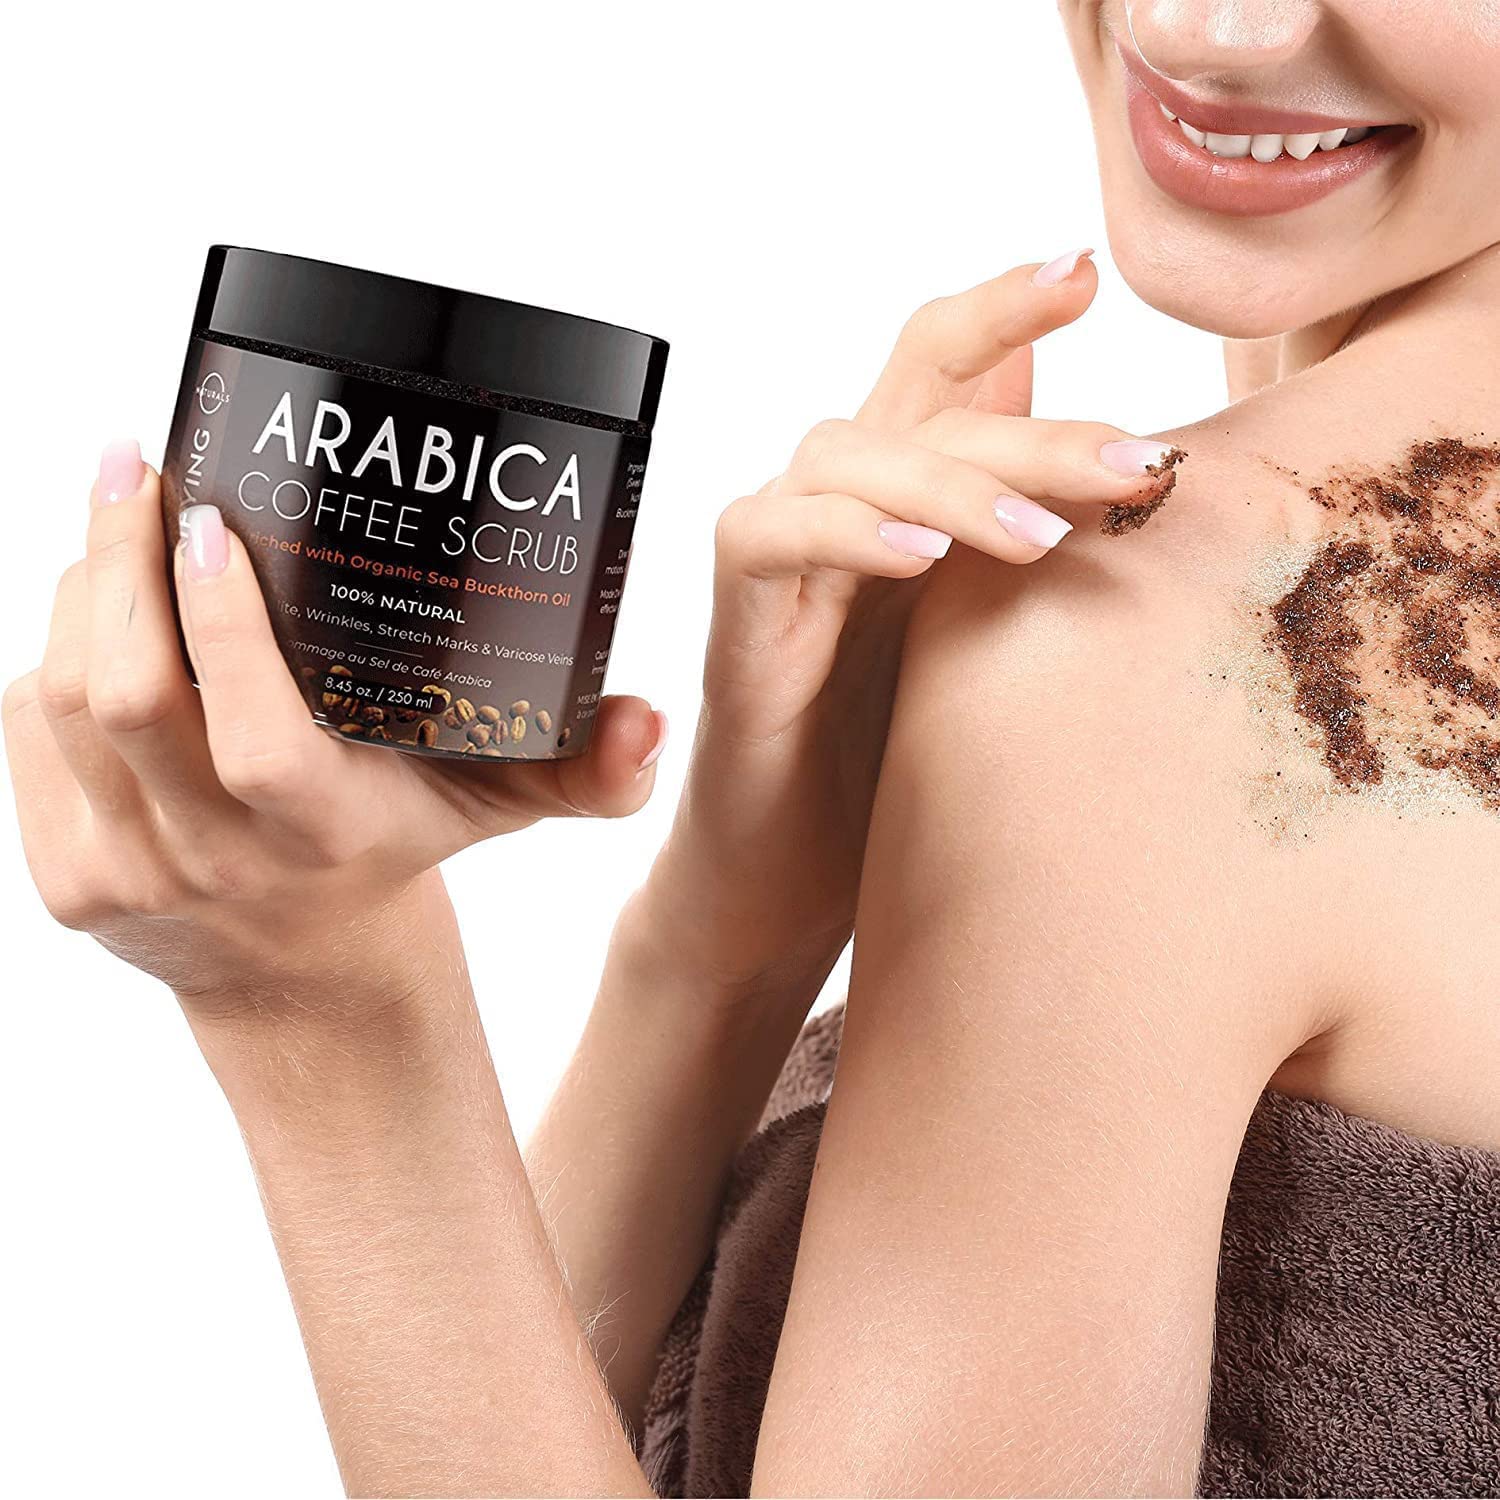 O Naturals Organic Coffee Arabica Women & Mens body scrub, Natural Dead Sea Salt Scrub, Moisturizing Leg, Hand Scrub & Face Scrub, Natural Body Polish, 8.45oz